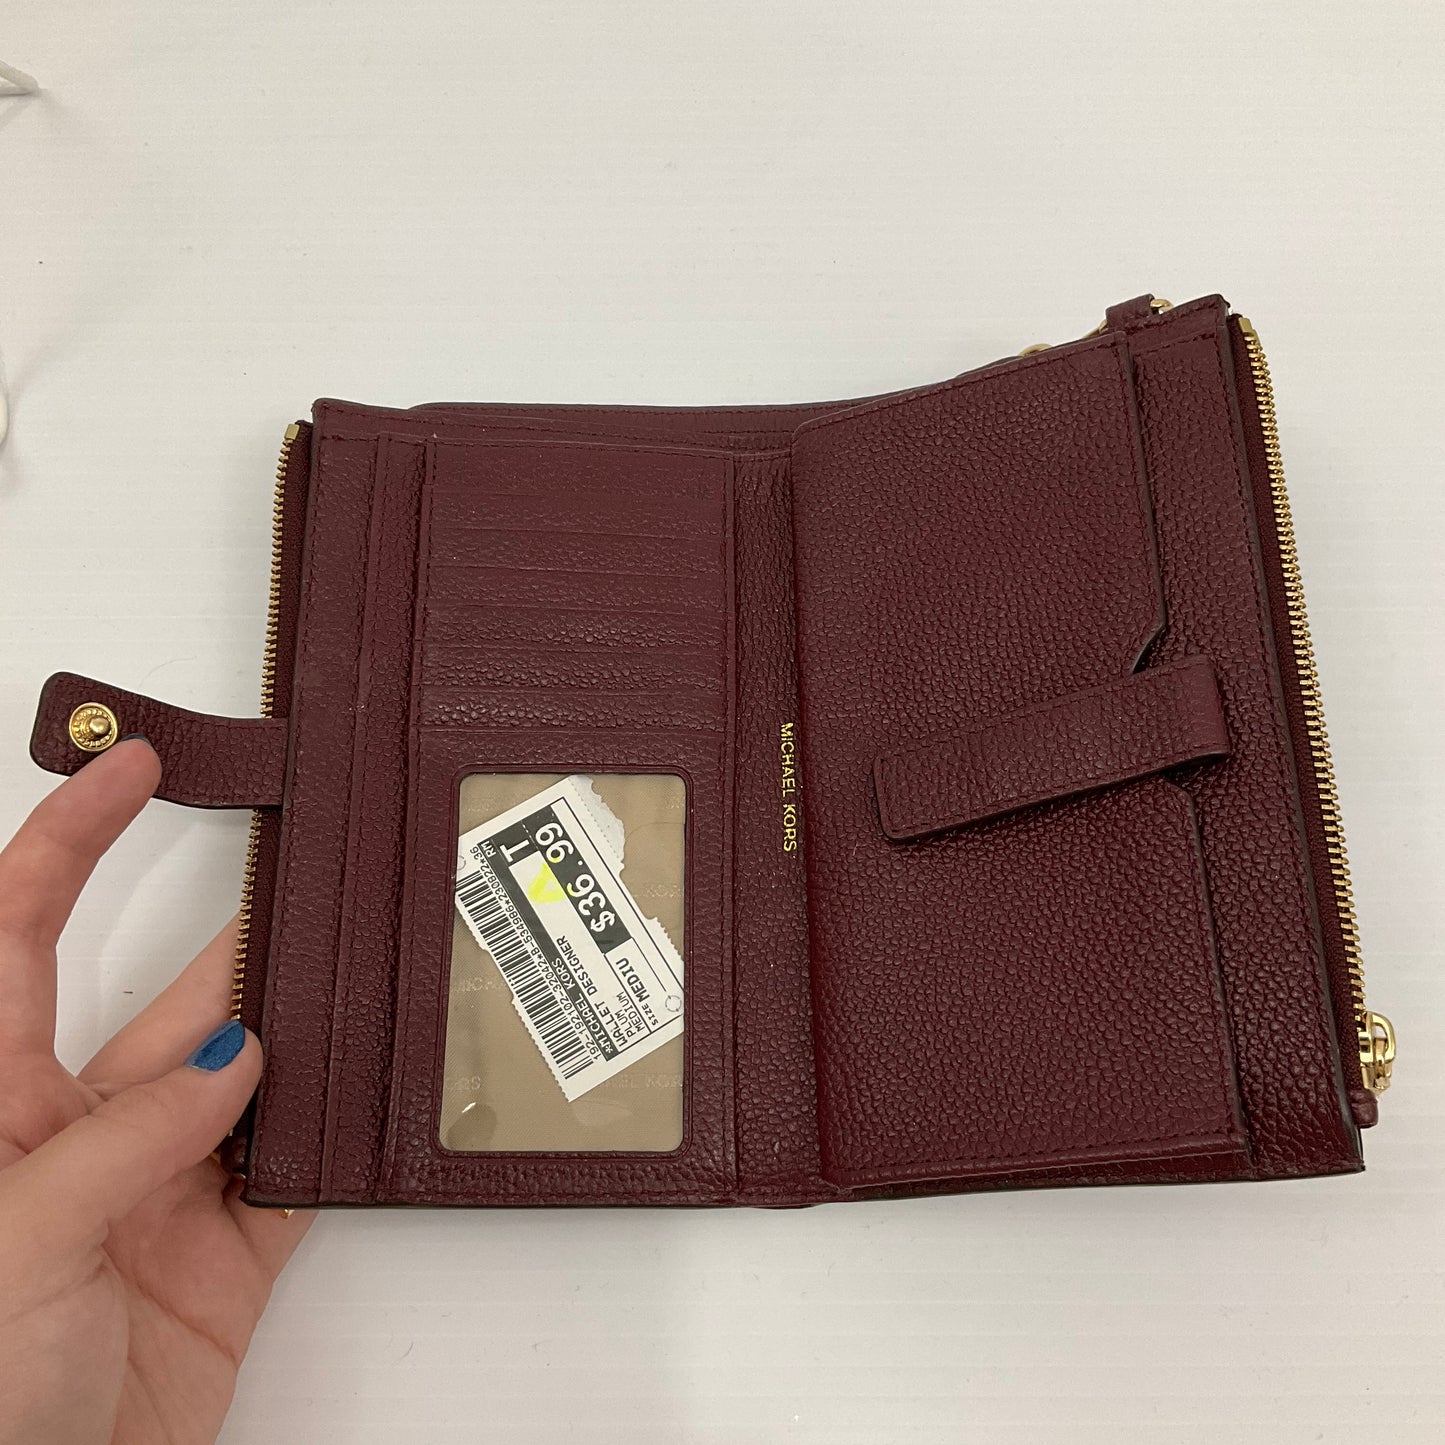 Wallet Designer By Michael Kors  Size: Medium